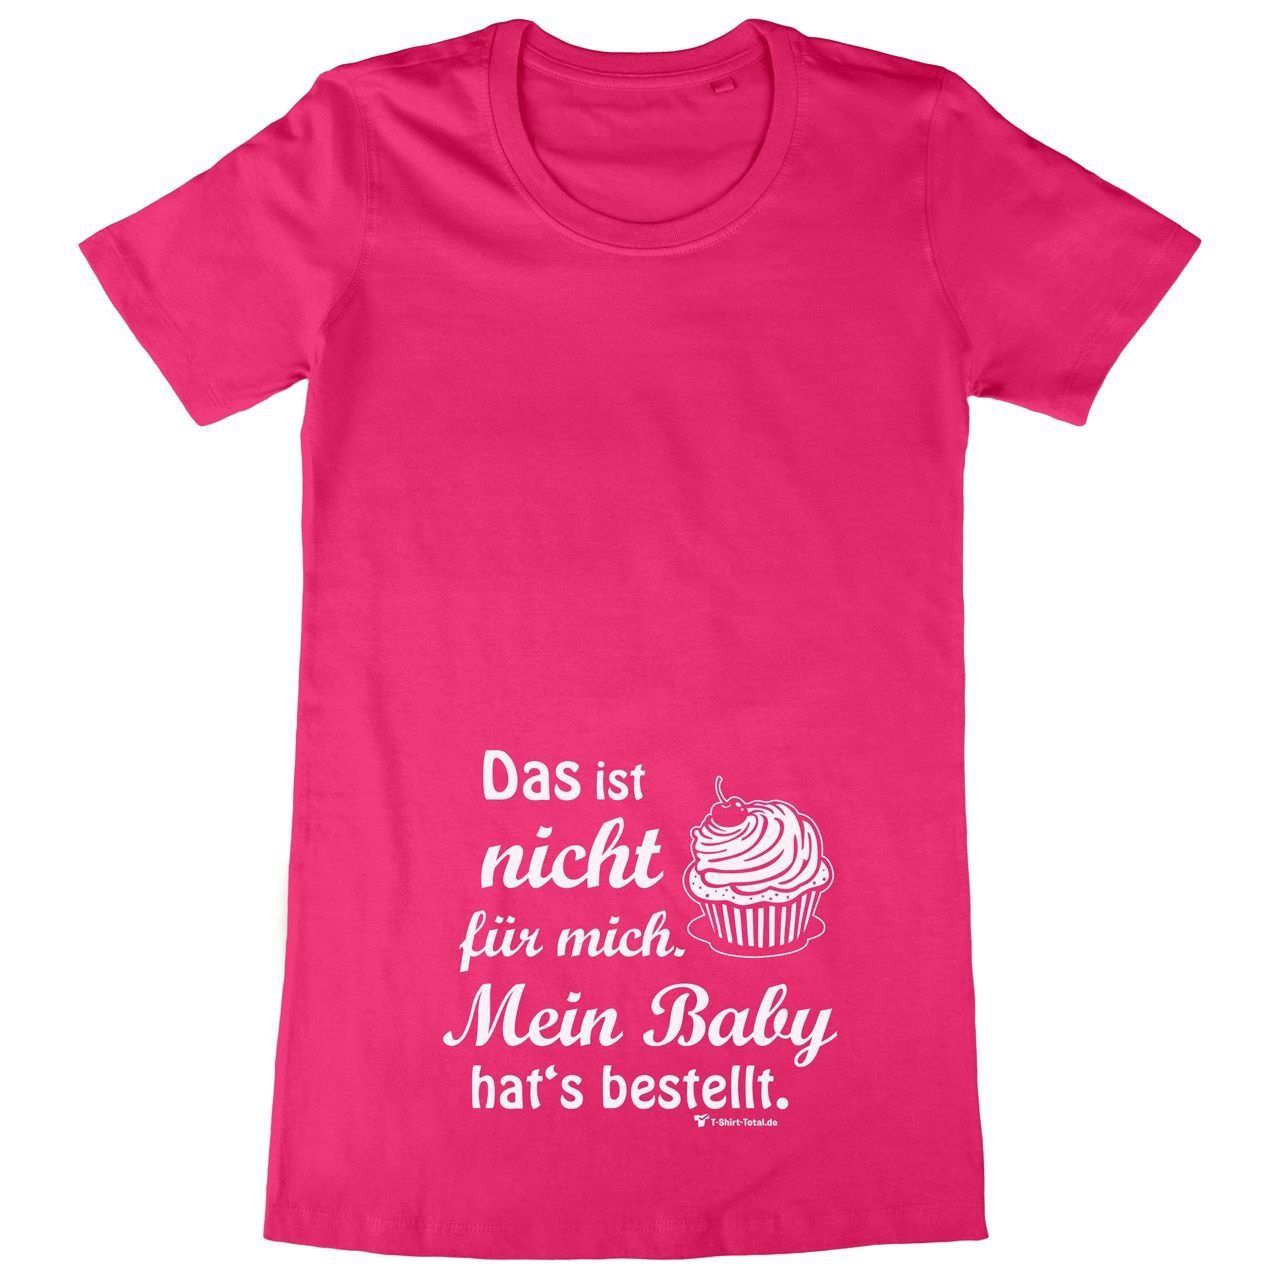 Baby hats bestellt Woman Long Shirt pink 2-Extra Large